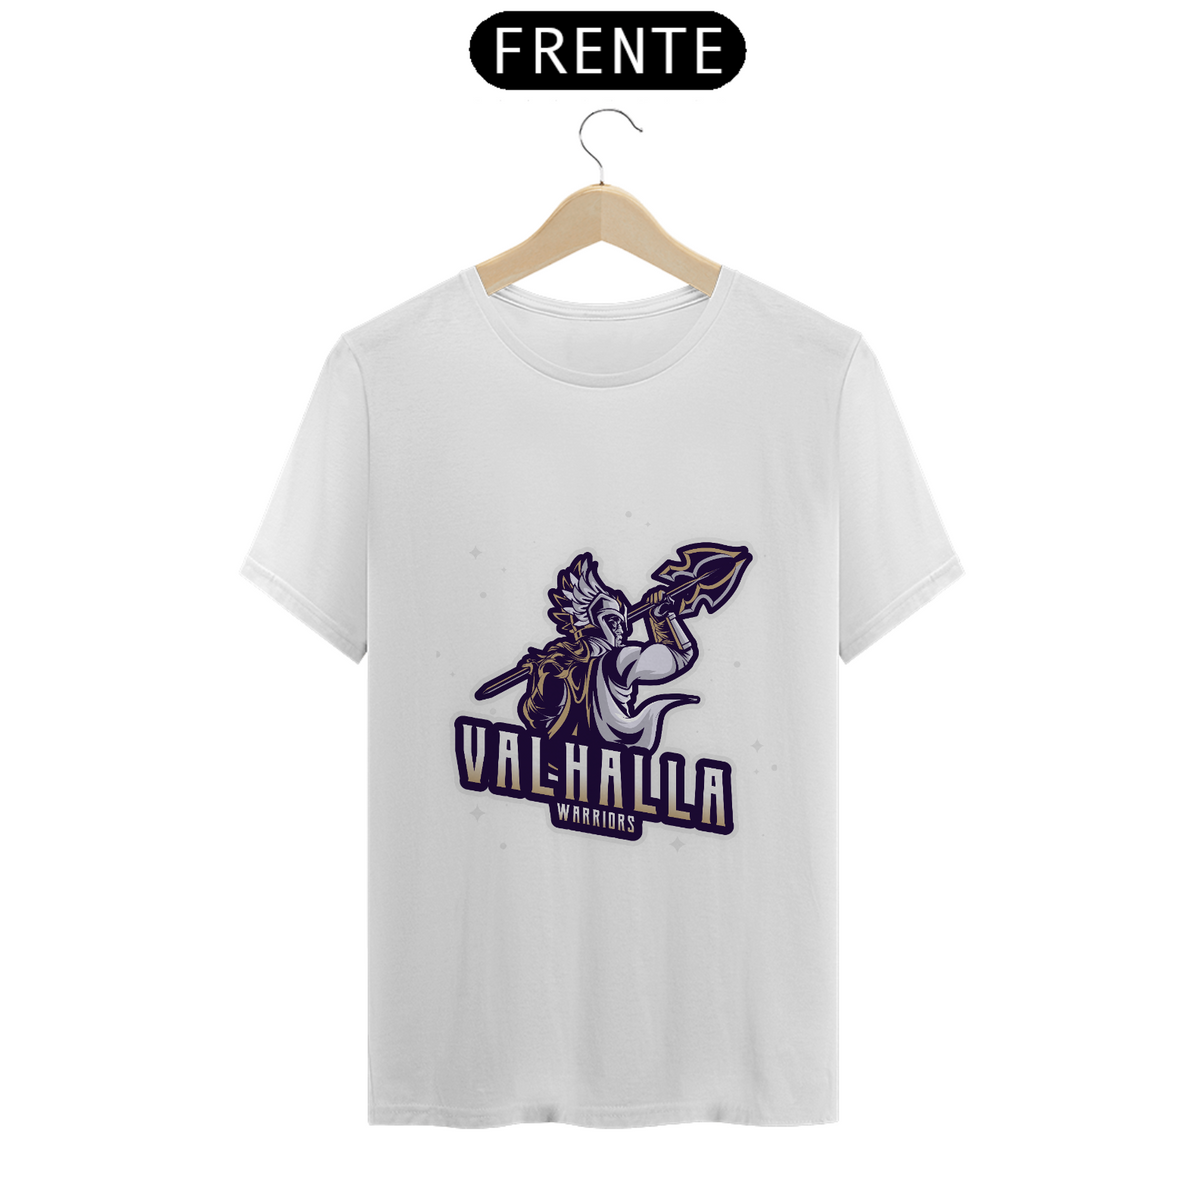 Nome do produto: Classic t shirt Valhala Warriors